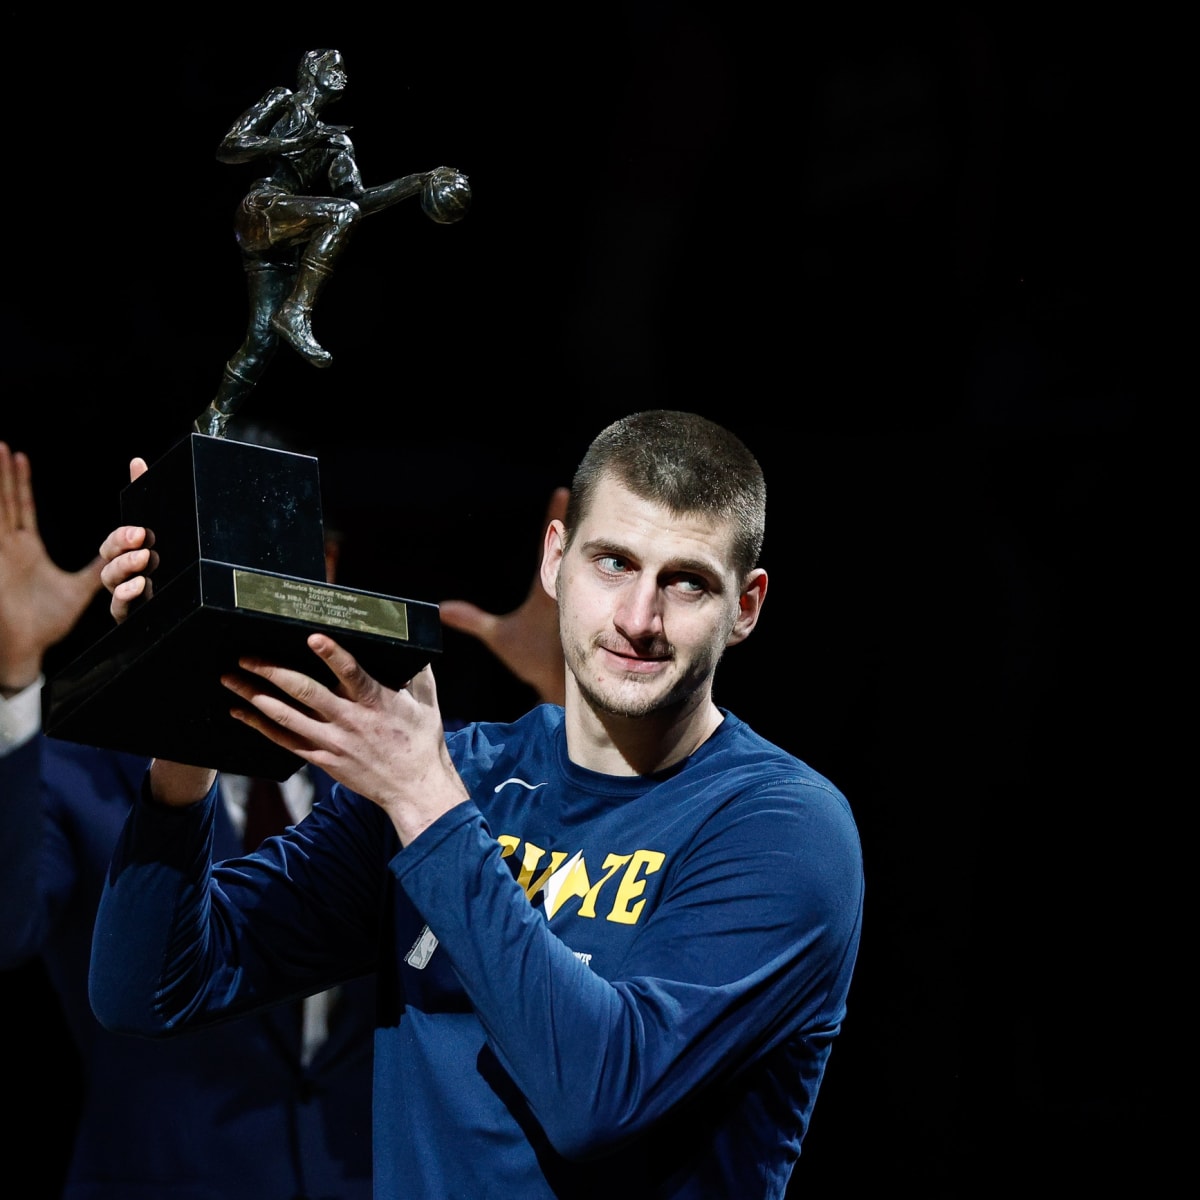 Giannis Antetokounmpo reportedly wins 2nd straight NBA MVP award